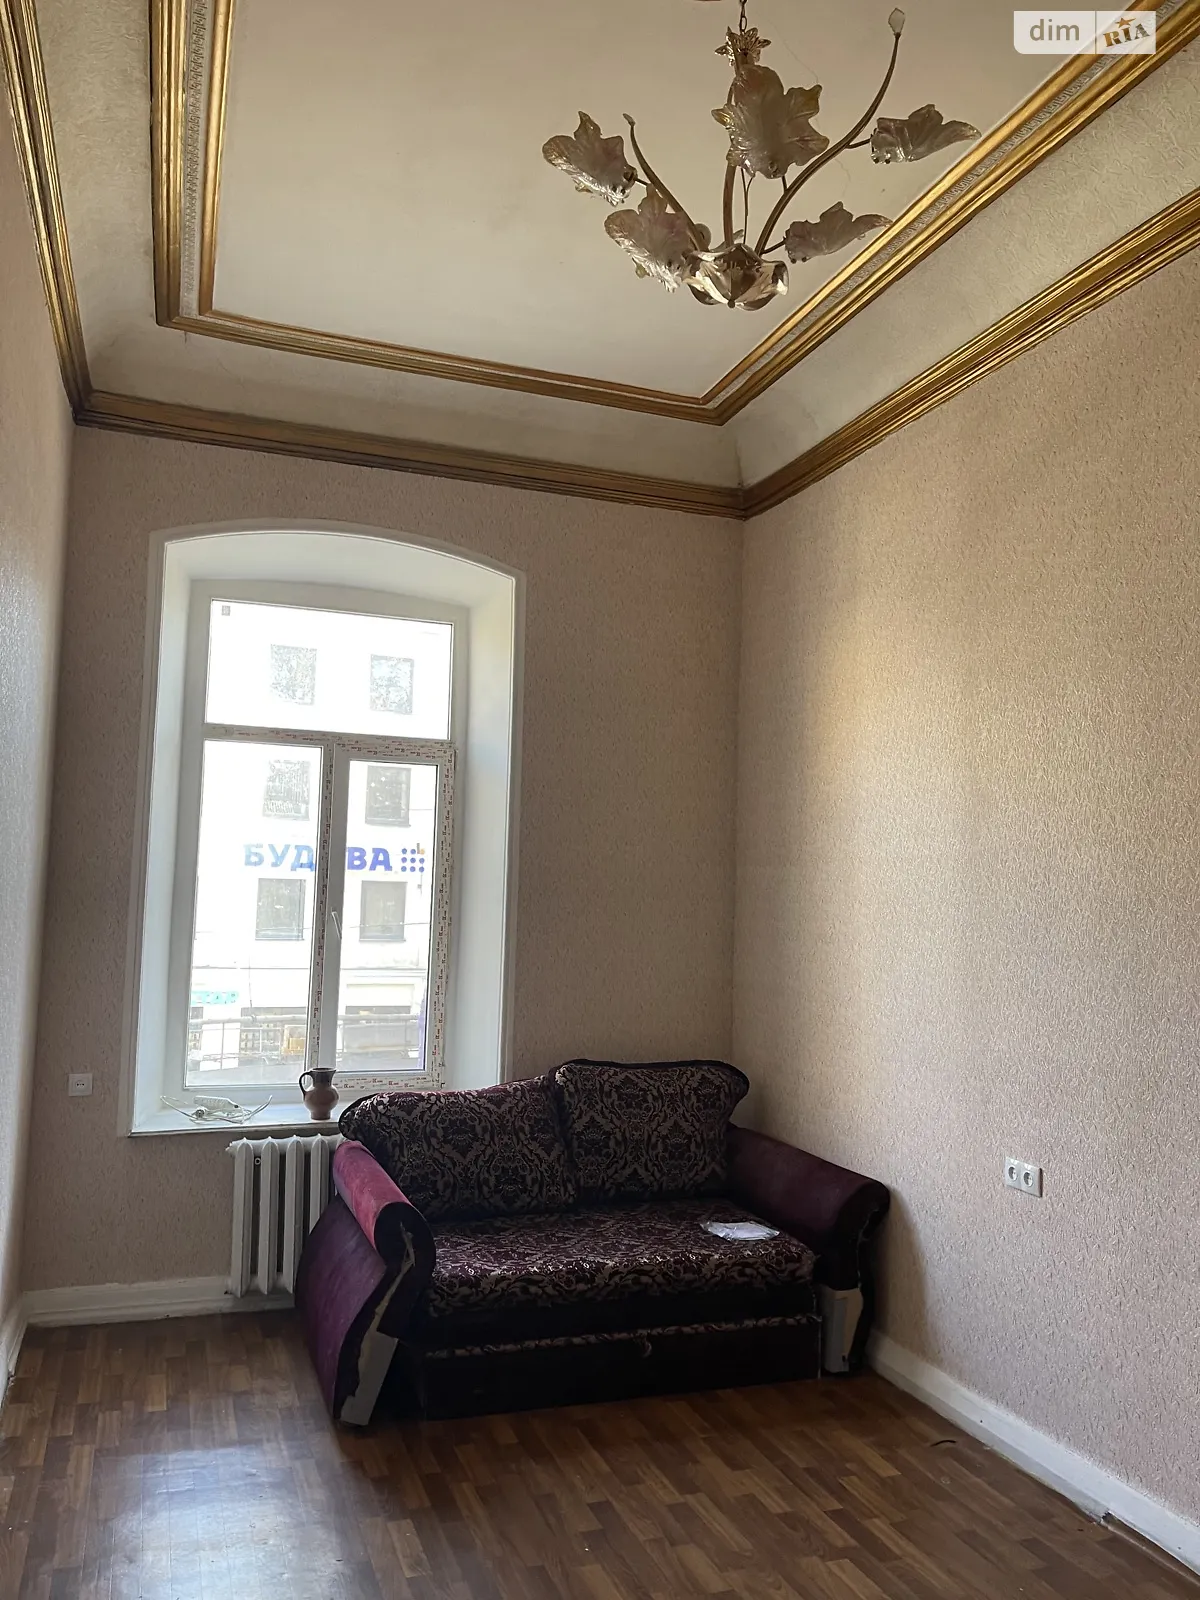 Продается комната 40 кв. м в Одессе, цена: 19500 $ - фото 1